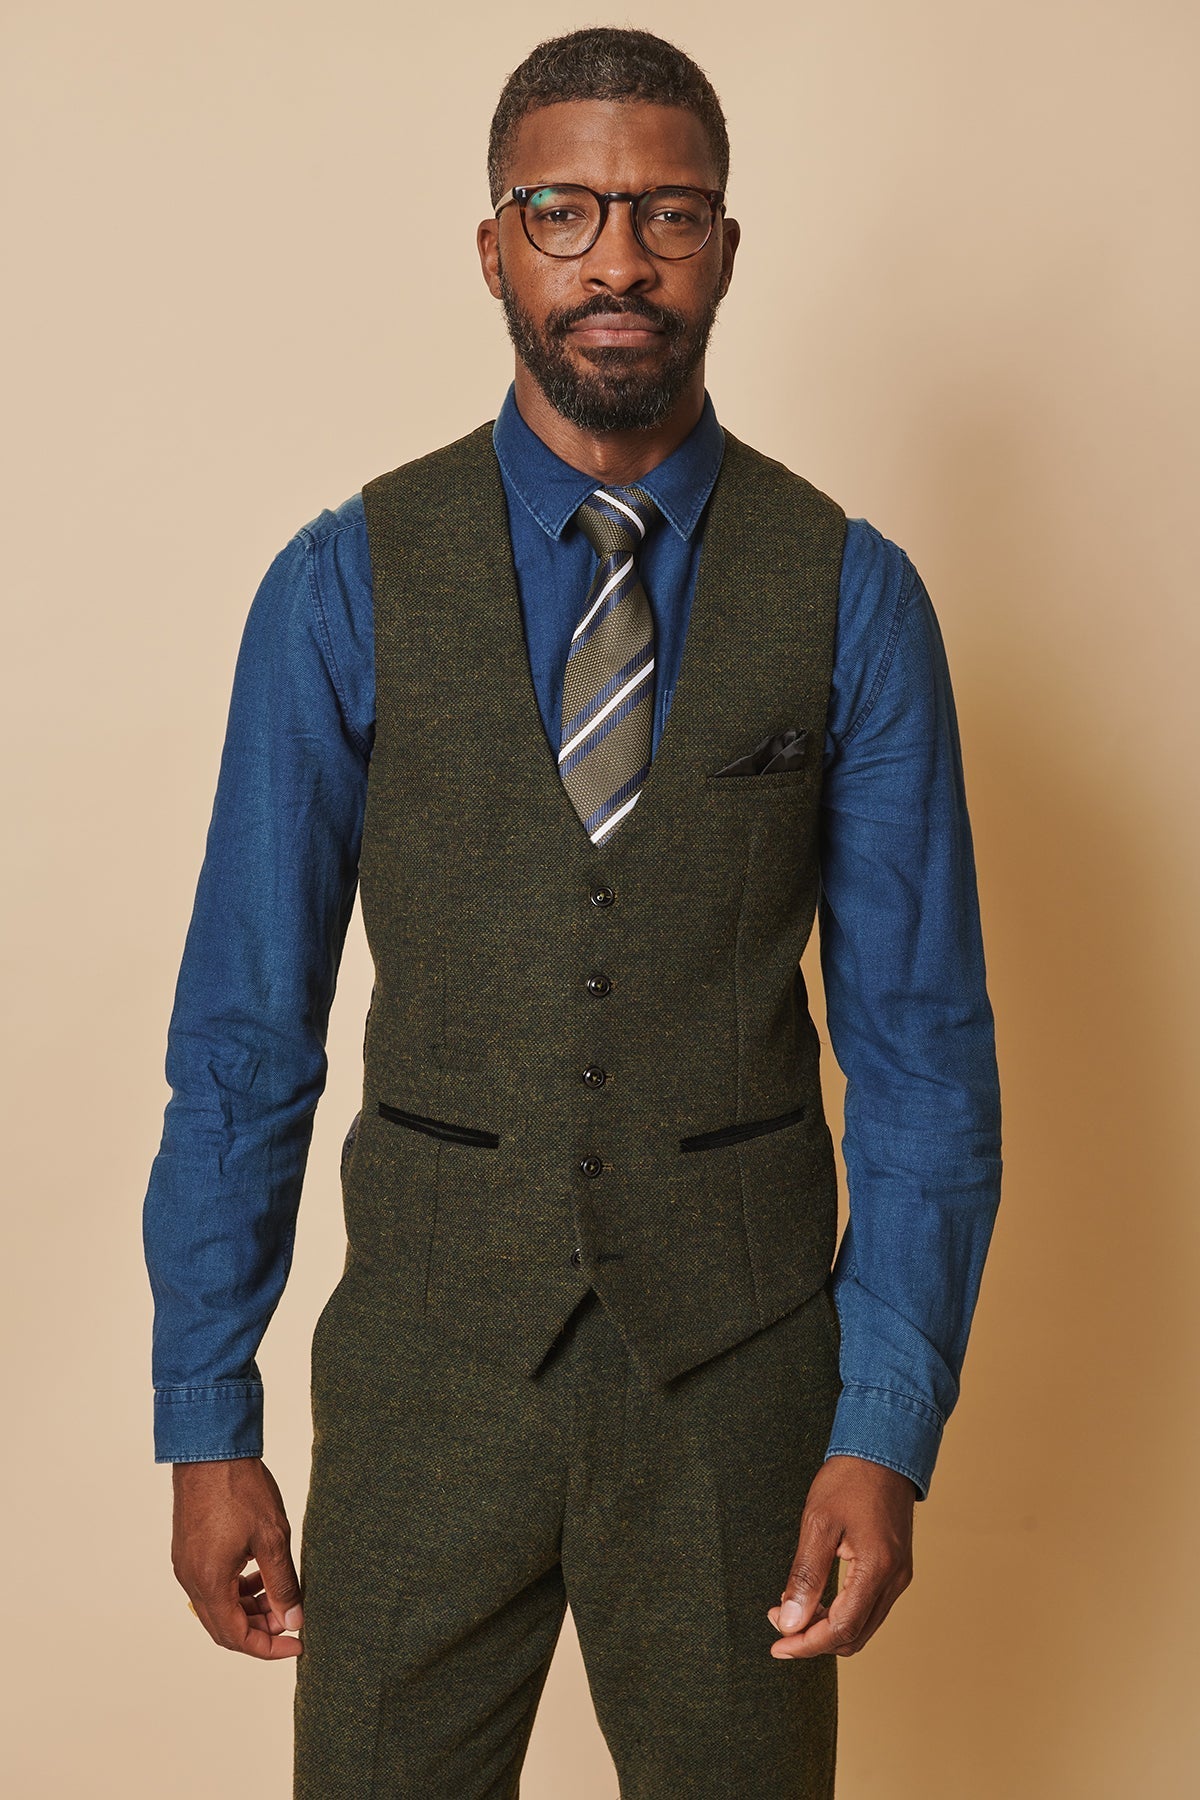 3-dielny pánsky oblek z tweedu Marlow olivový - Marc Darcy